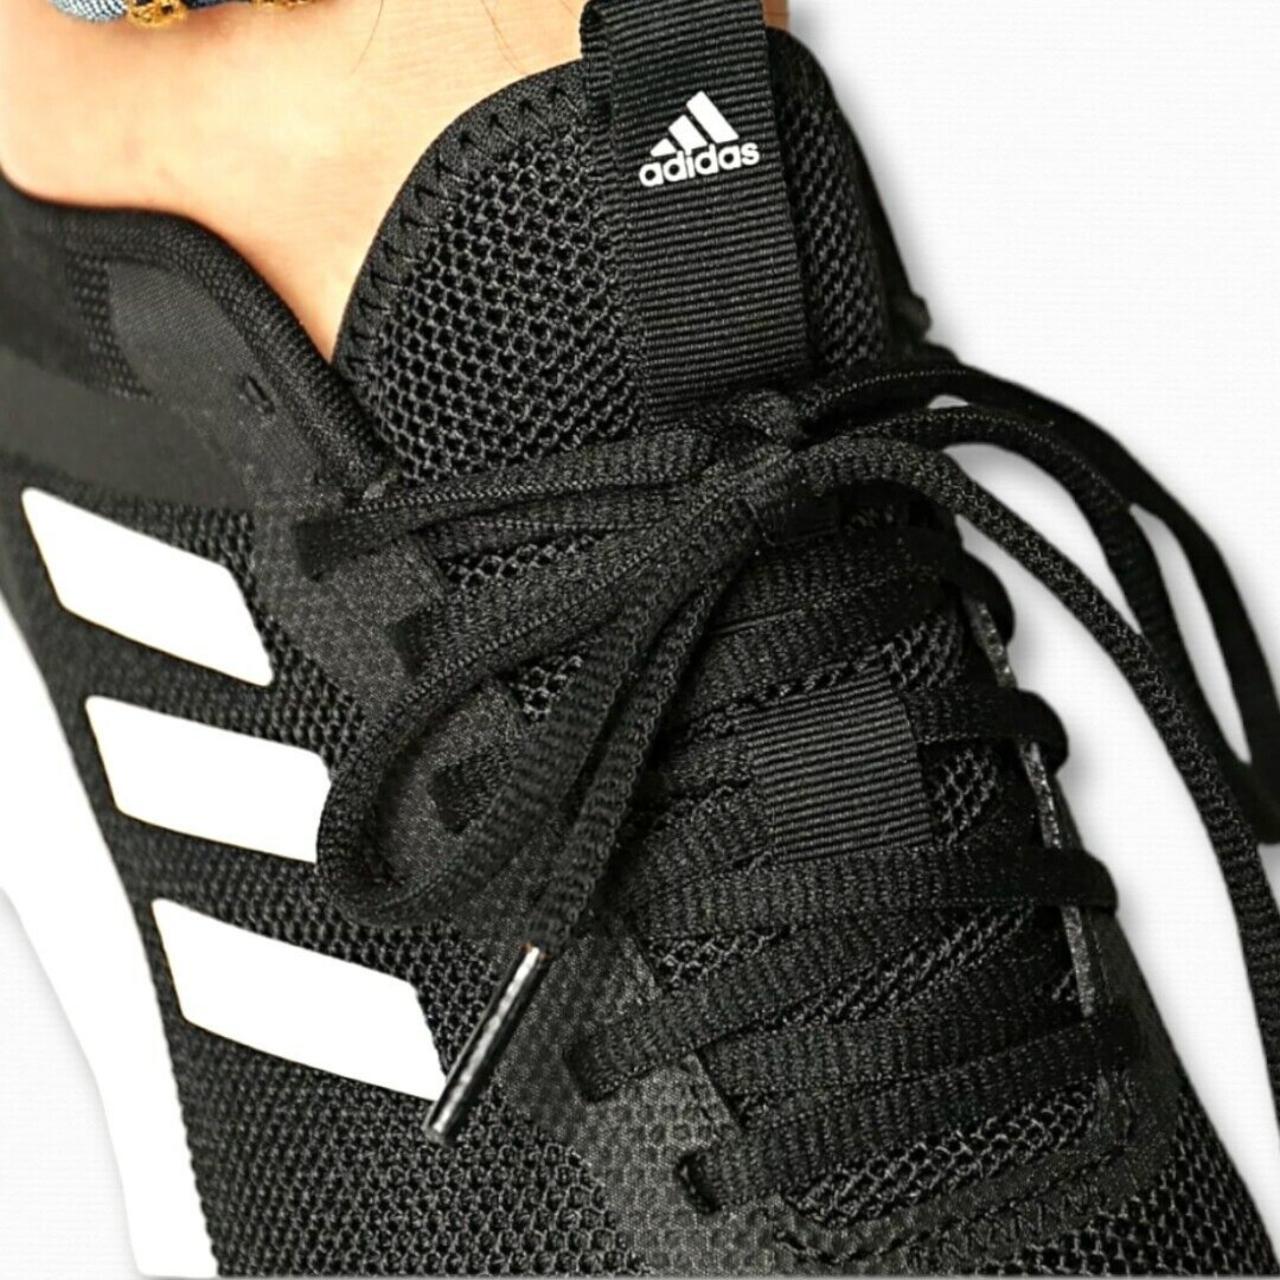 Adidas Men's Black Boots (4)